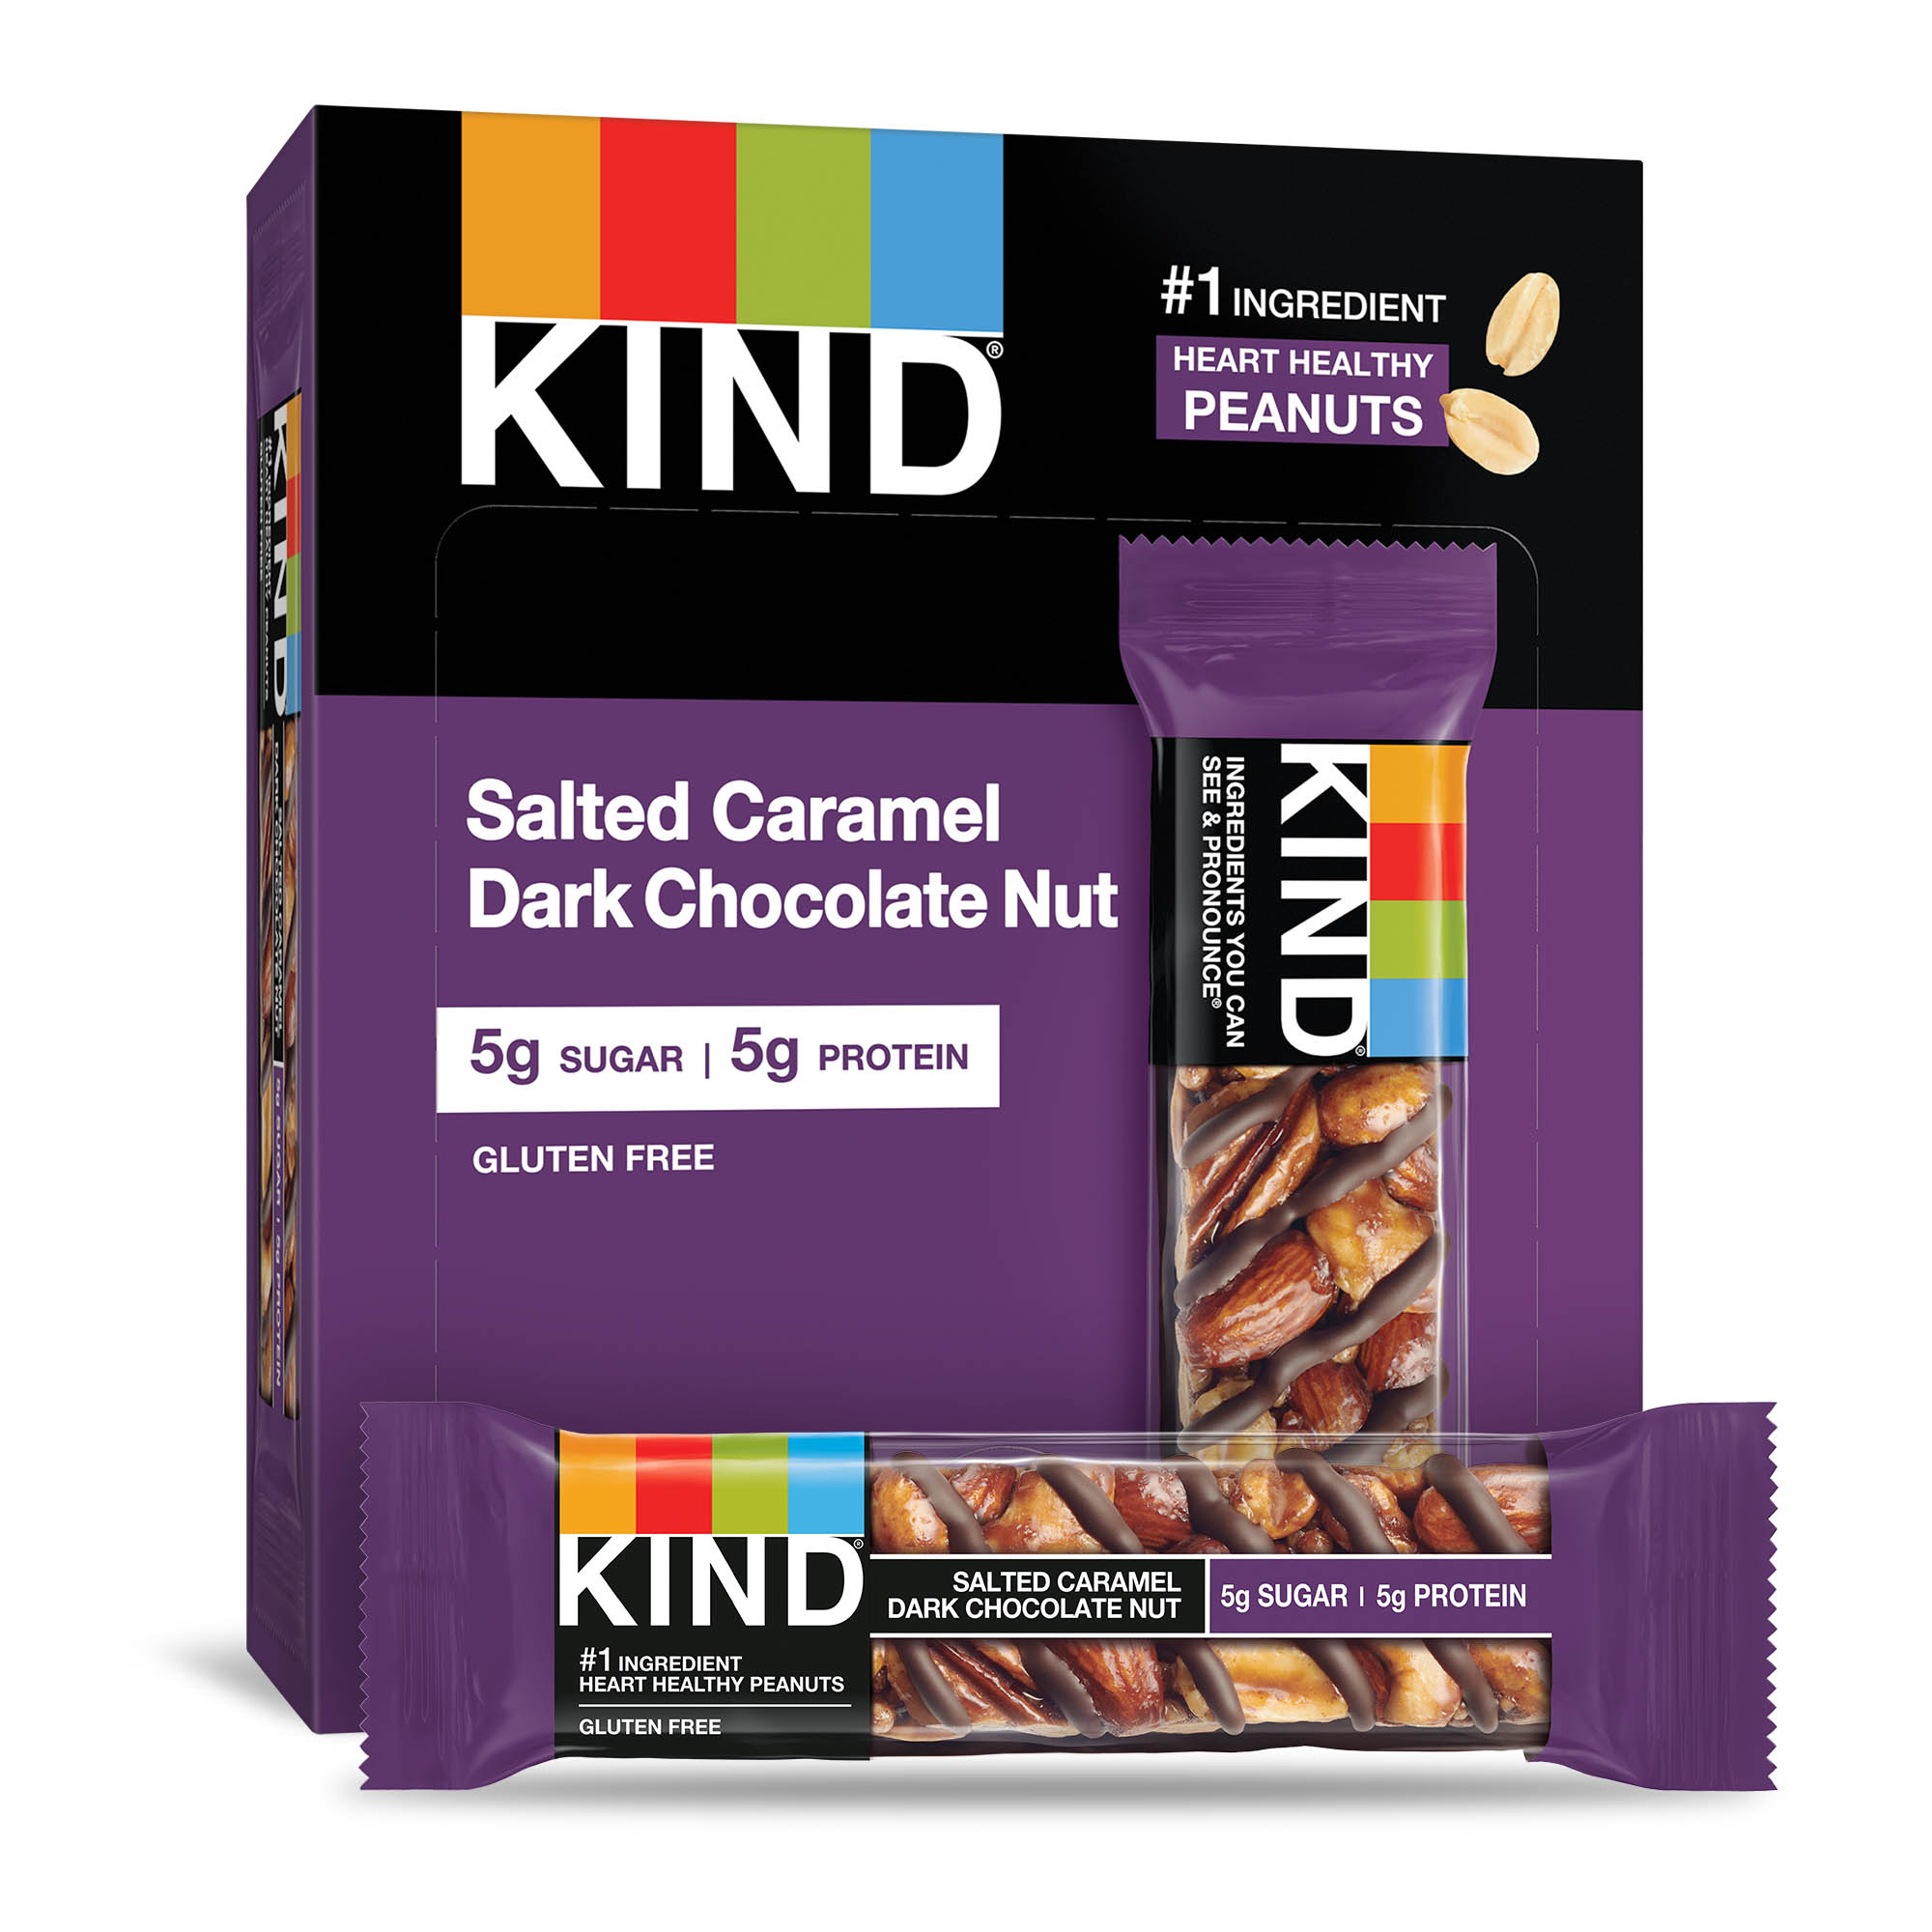 KIND Salted Caramel Dark Chocolate Nut Bars - Gluten-free, Trans Fat Free, Sulfur dioxide-free, Low Sodium, No Artificial Flavor